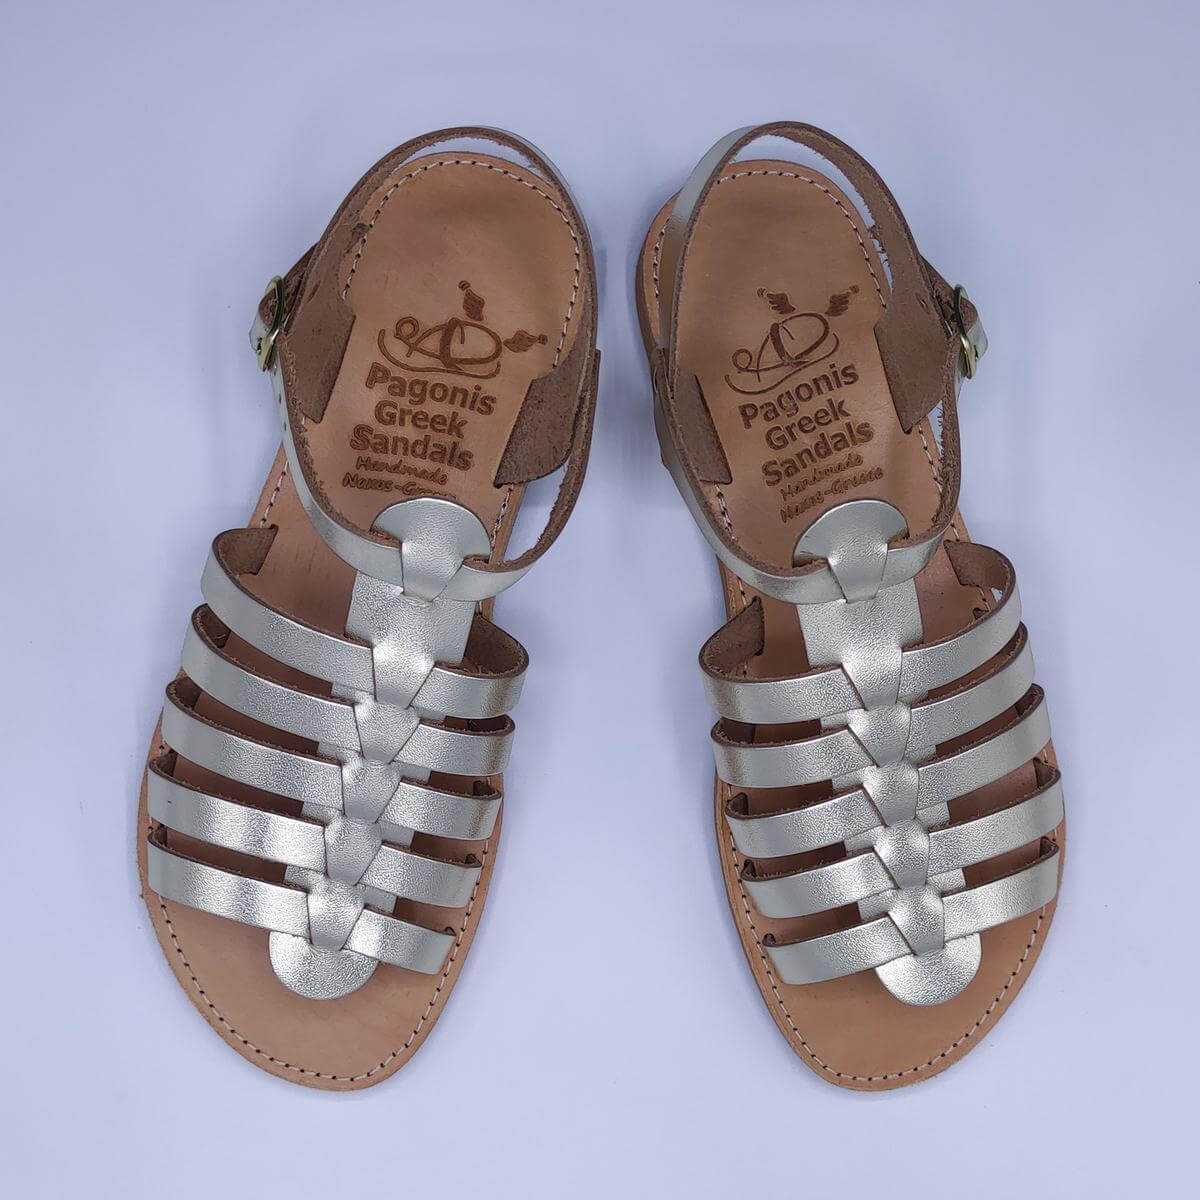 Women Strappy Gladiator Sandals Flats Metallic Gold